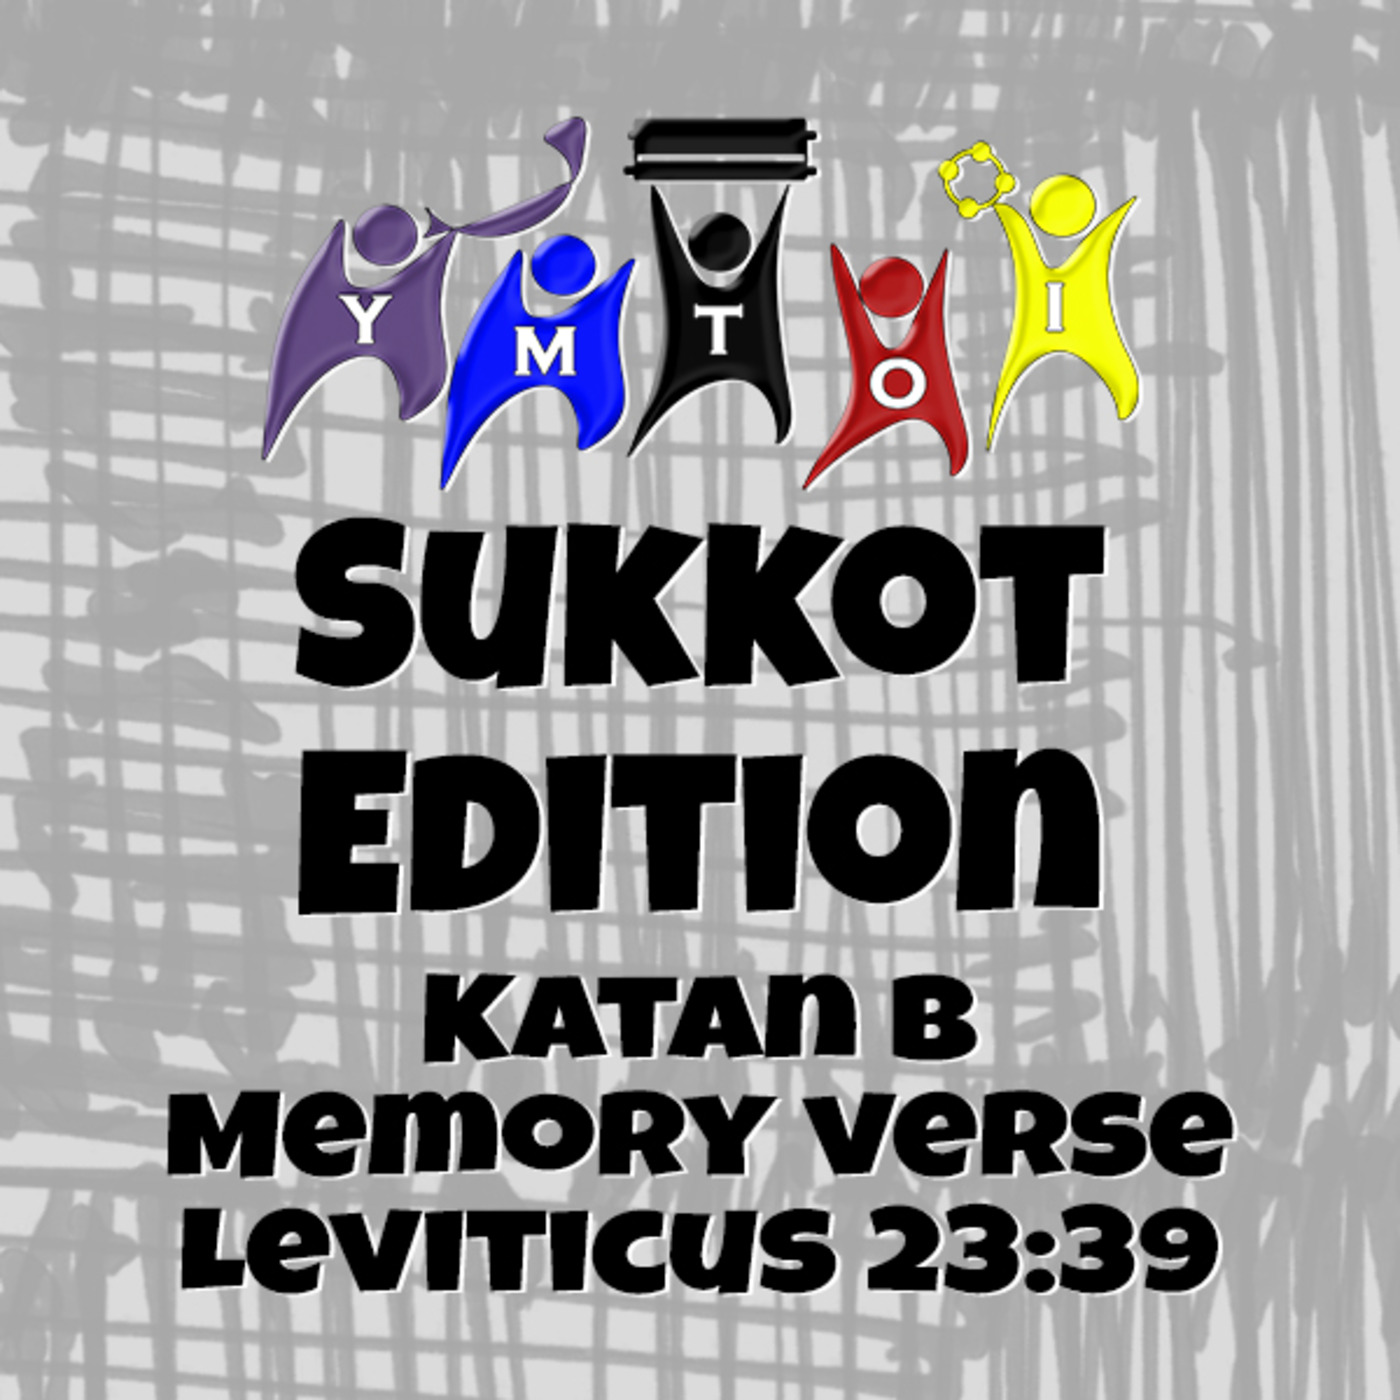 Episode 670: YMTOI Parsha Pearls Sukkot Edition | Memory Verse for Katan B | Leviticus 23:39